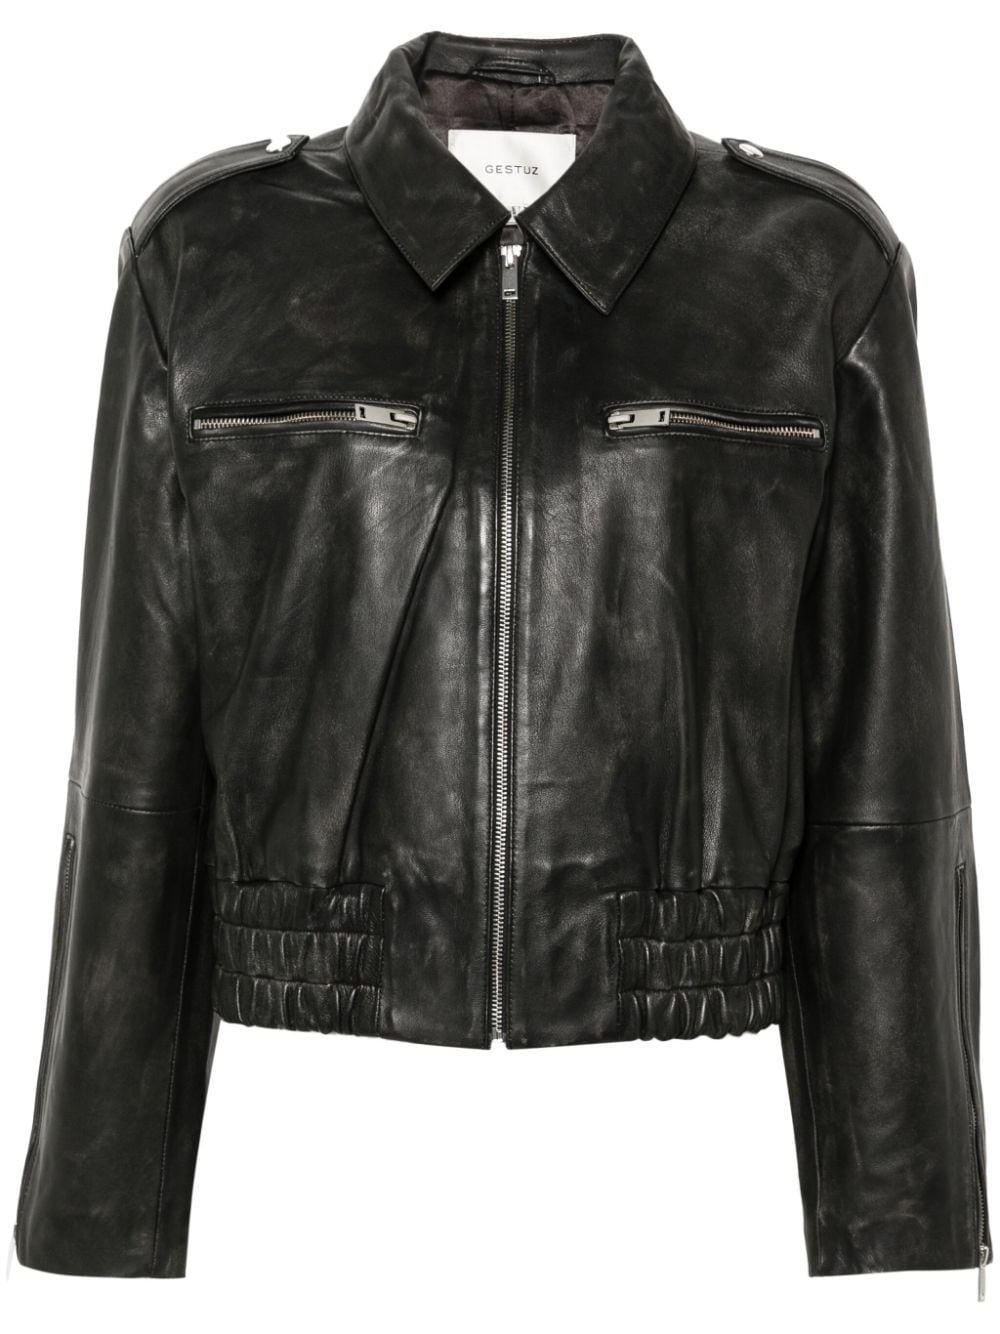 Image 1 of Gestuz GemmaGZ leather jacket